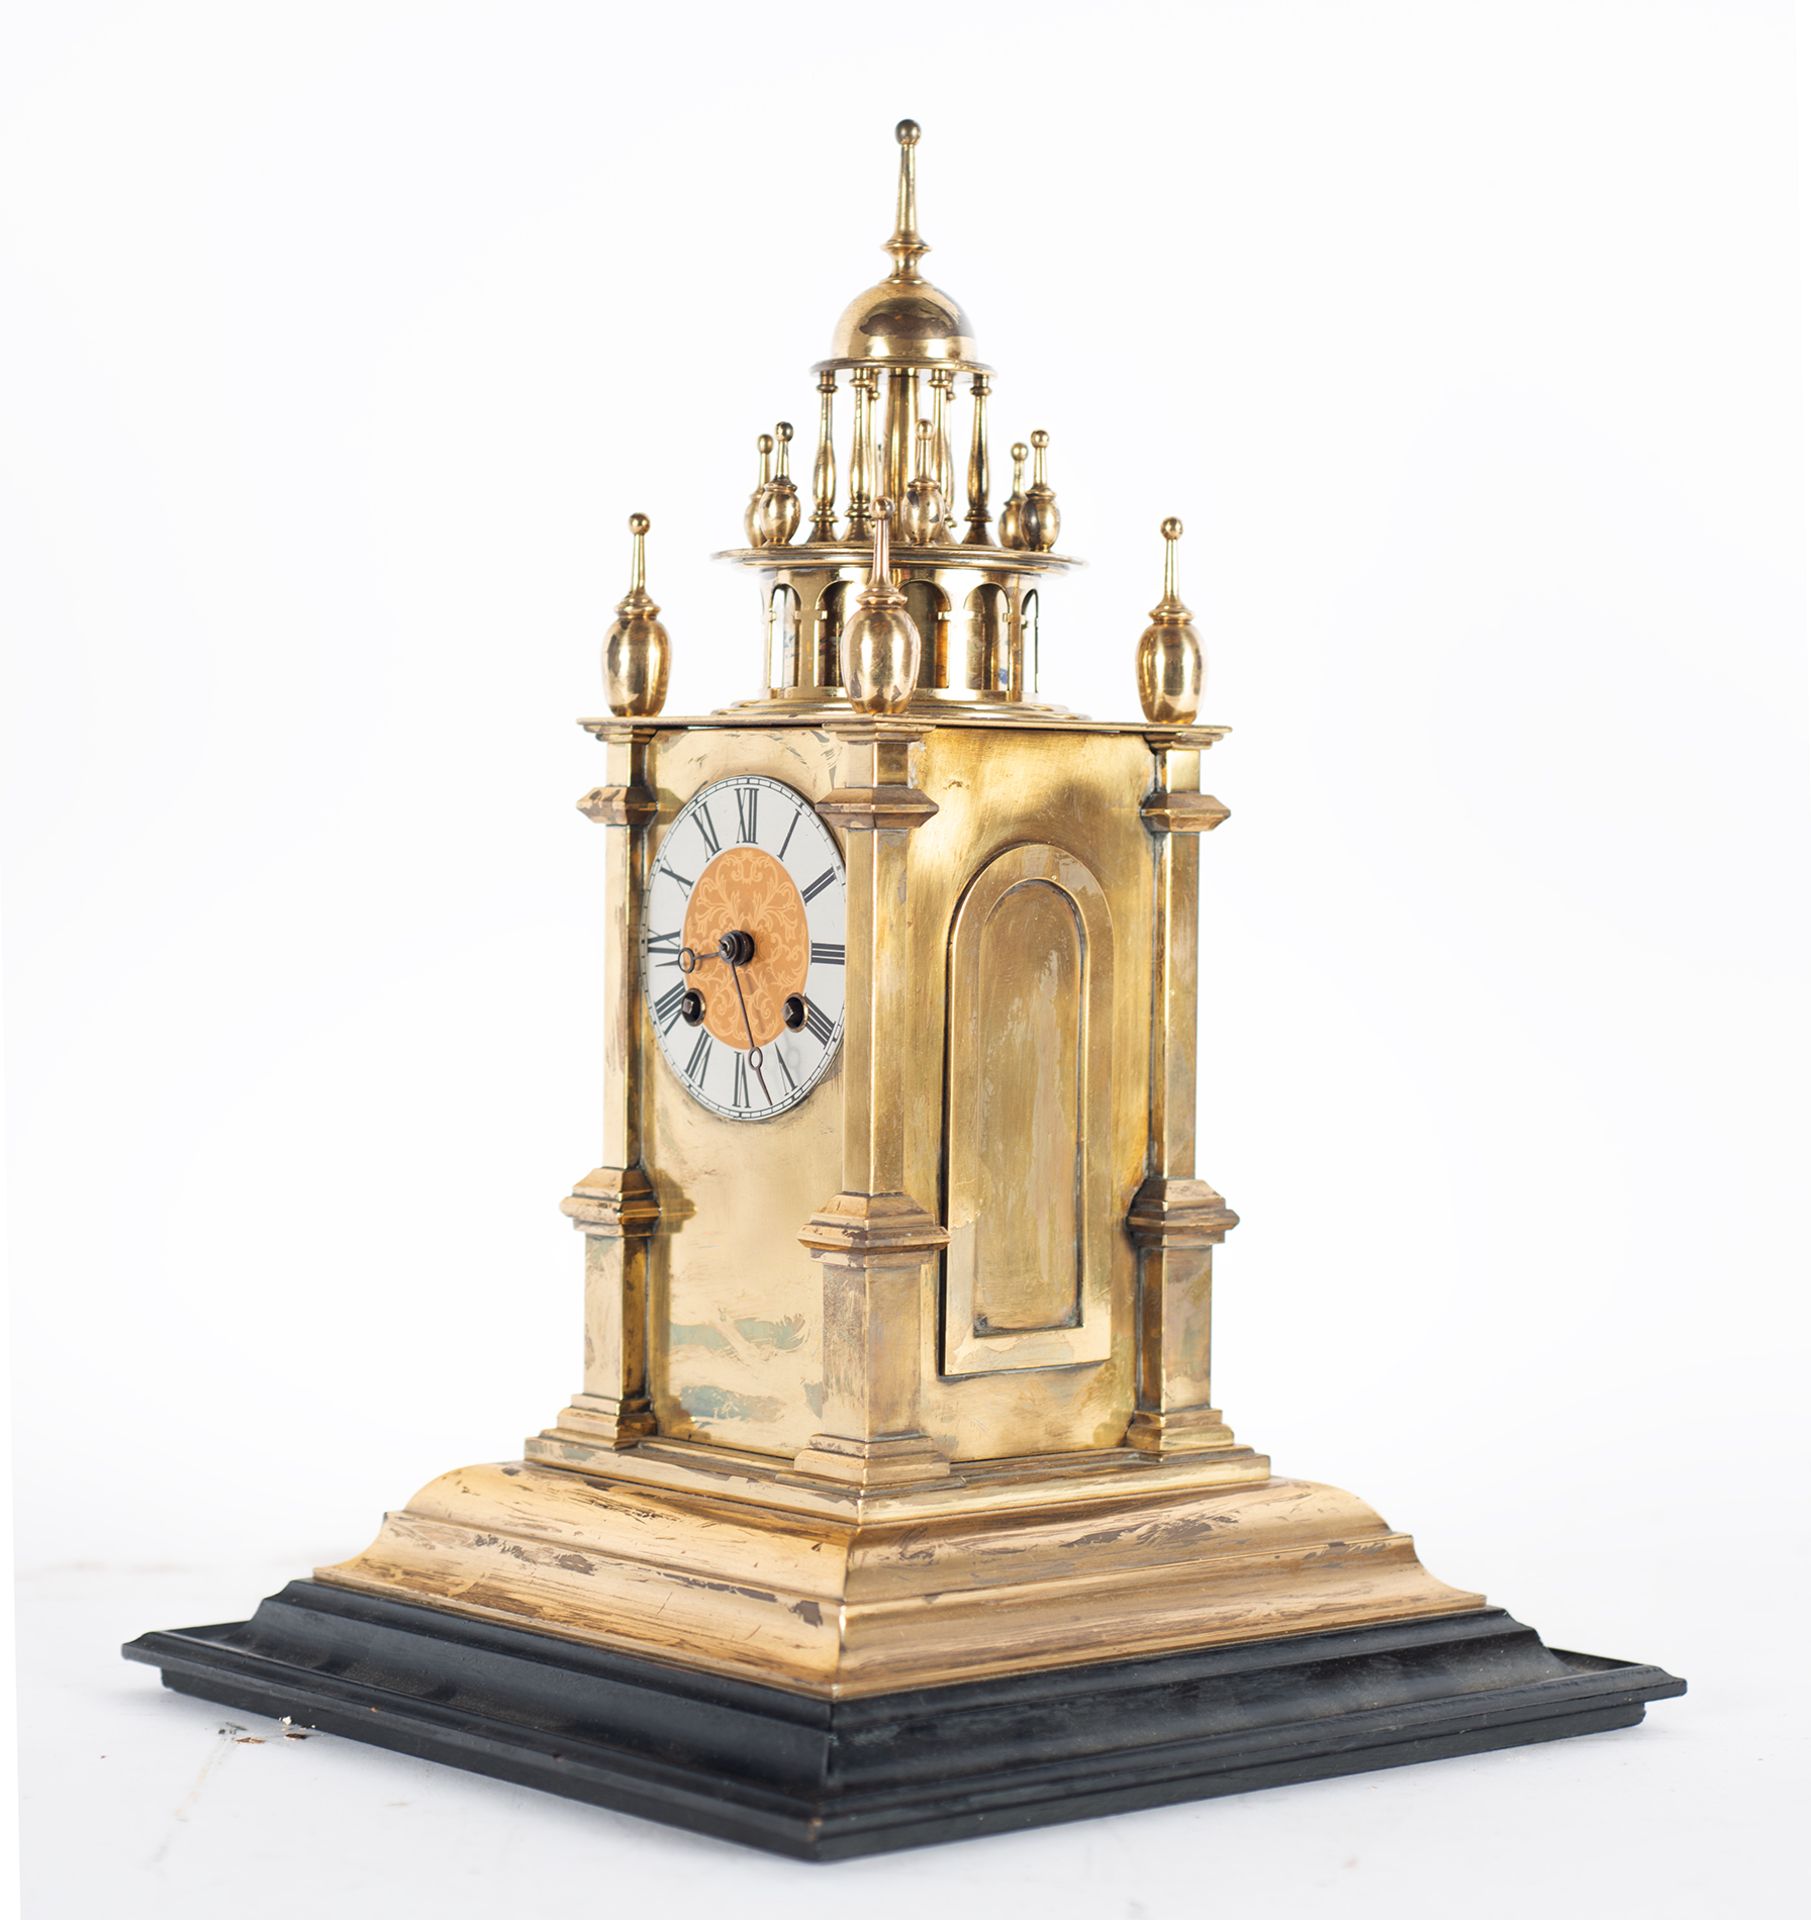 Nuremberg-type cathedral clock, 19th century - Image 2 of 5